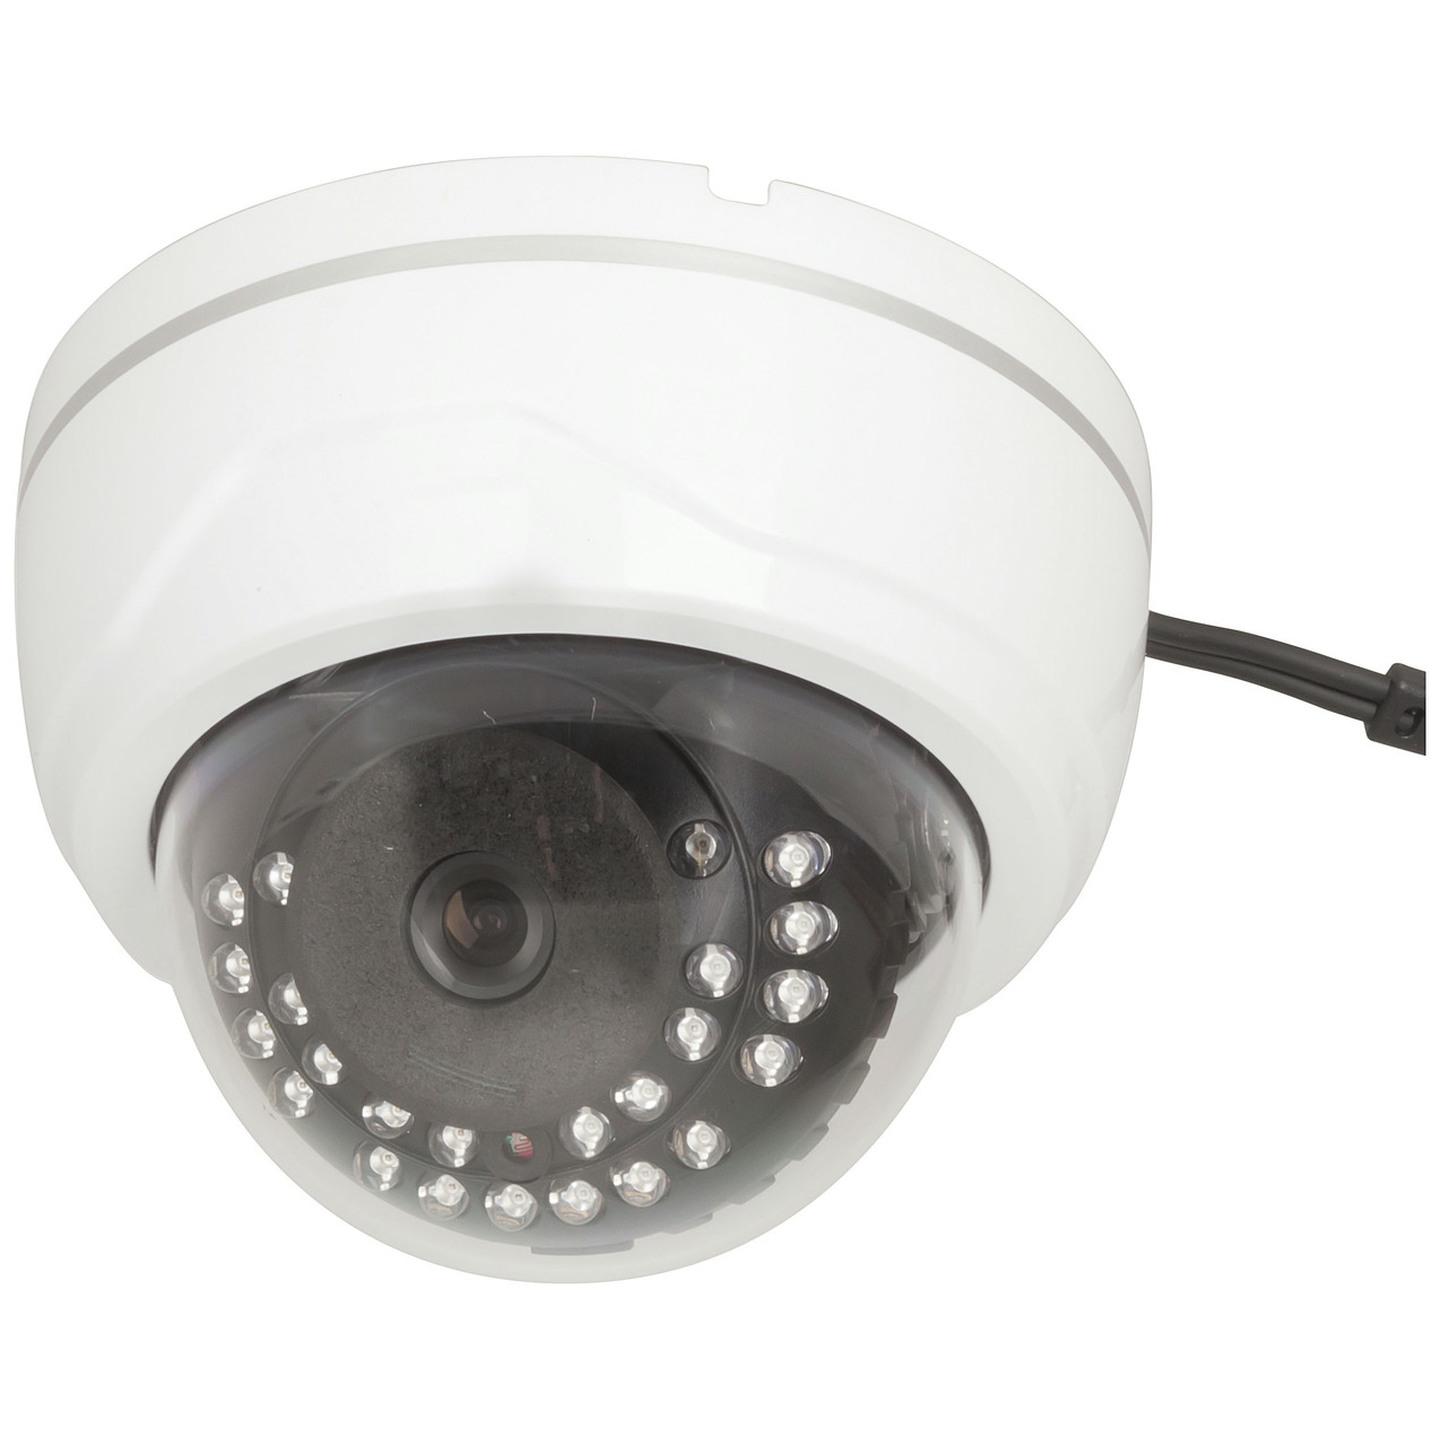 1000TVL CMOS Dome Camera with IR